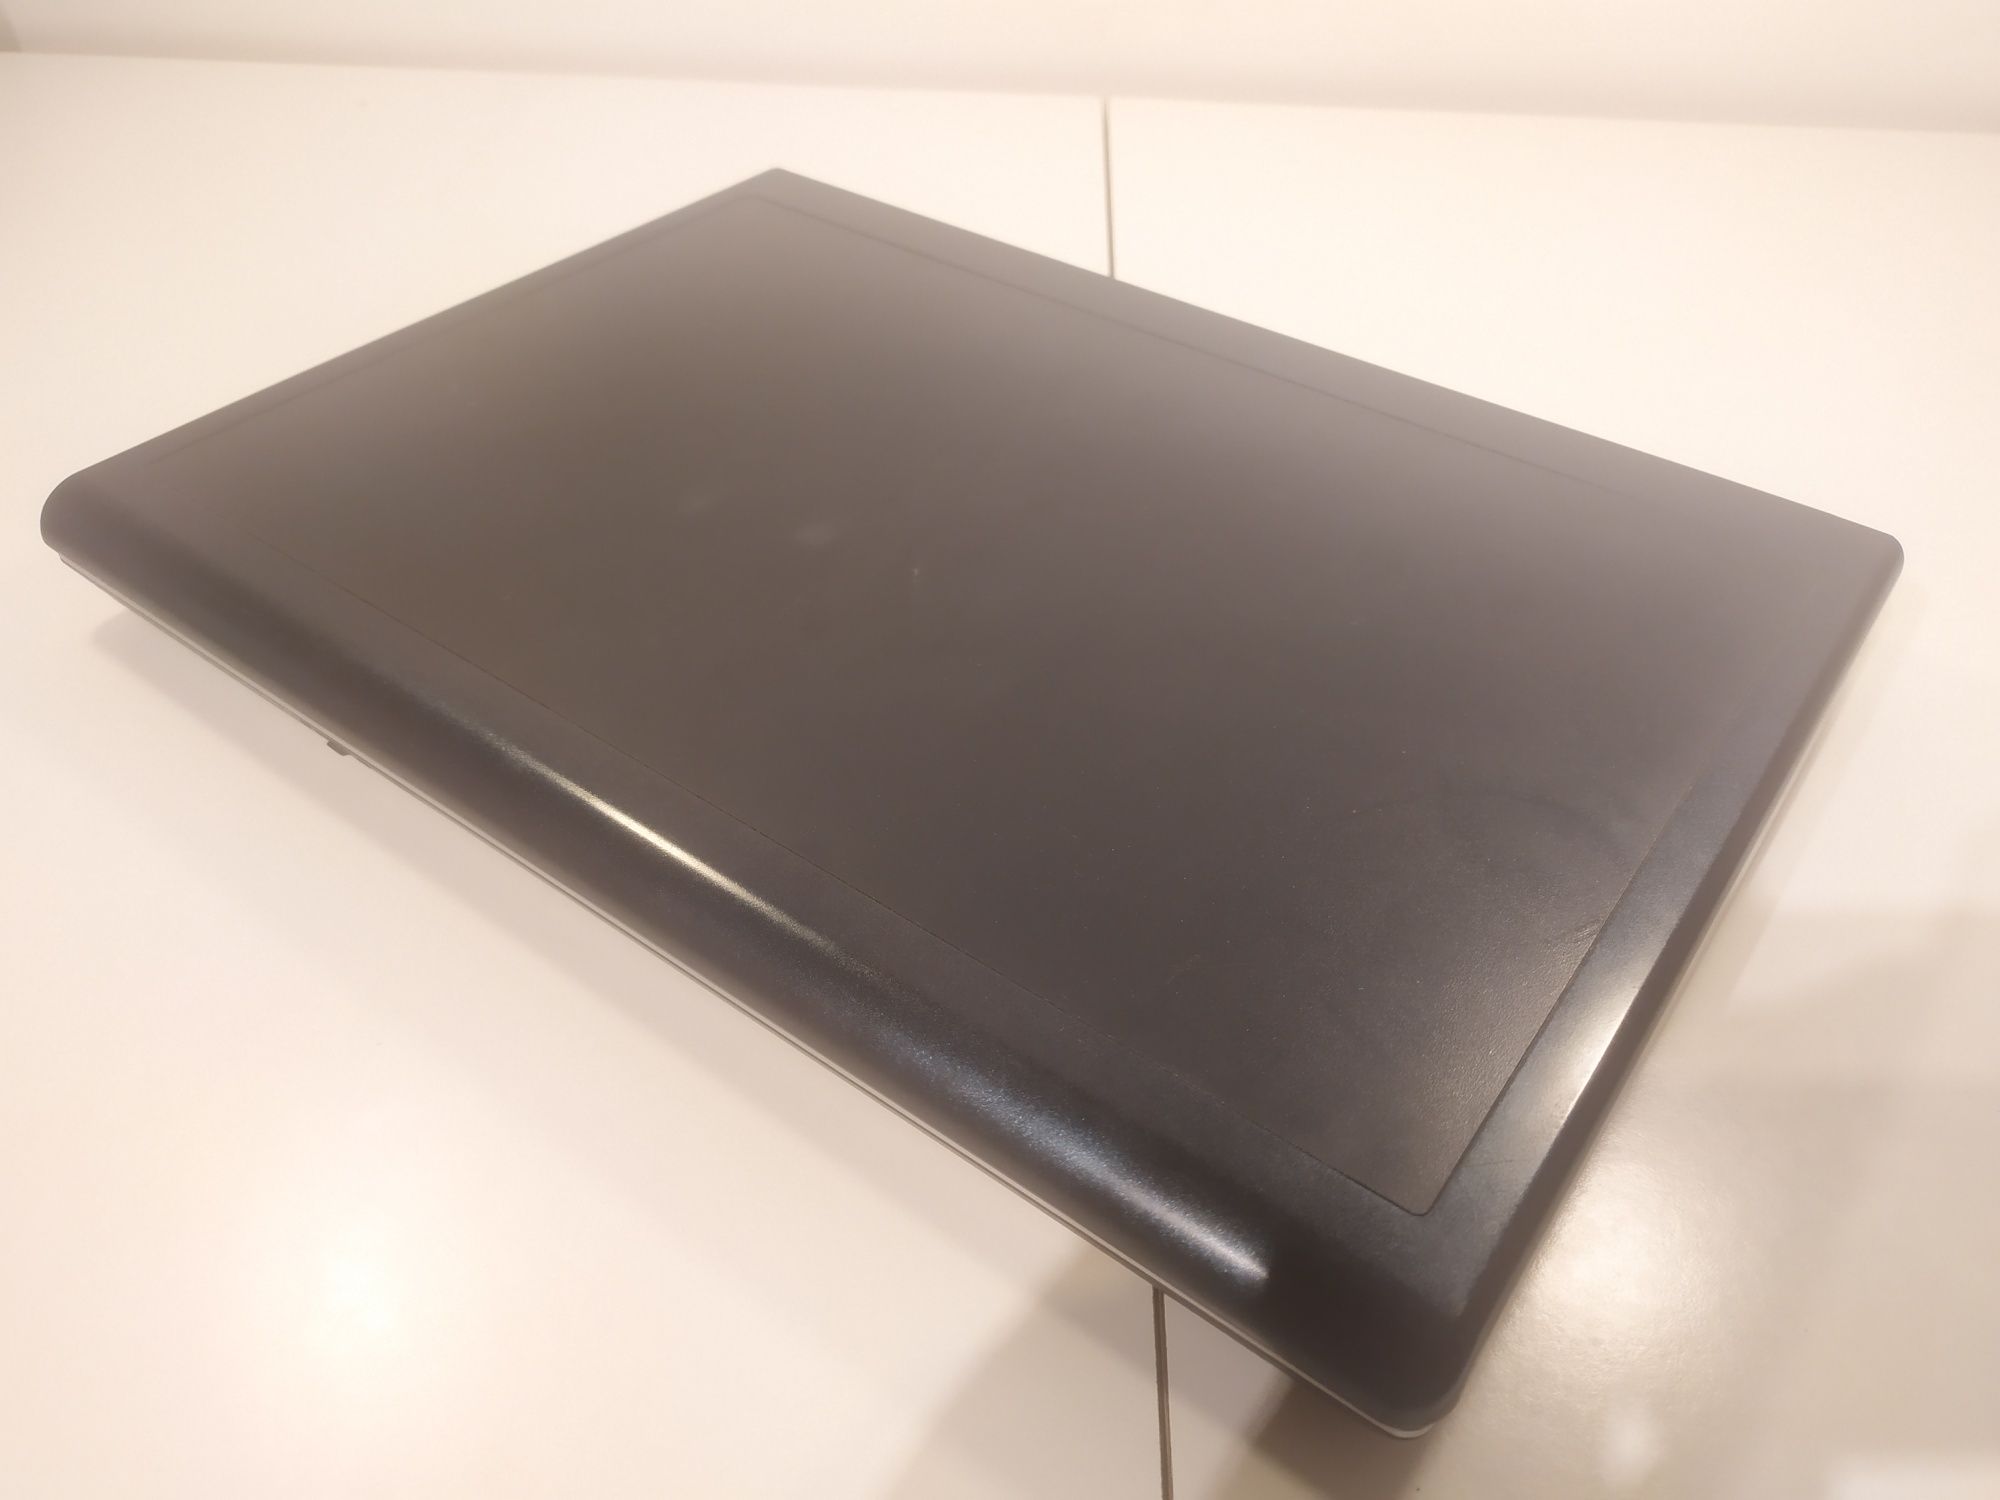 Laptop COMPAL FL91 Intel Core 2 Duo 4GB ram hdd 120gb windows 10 note